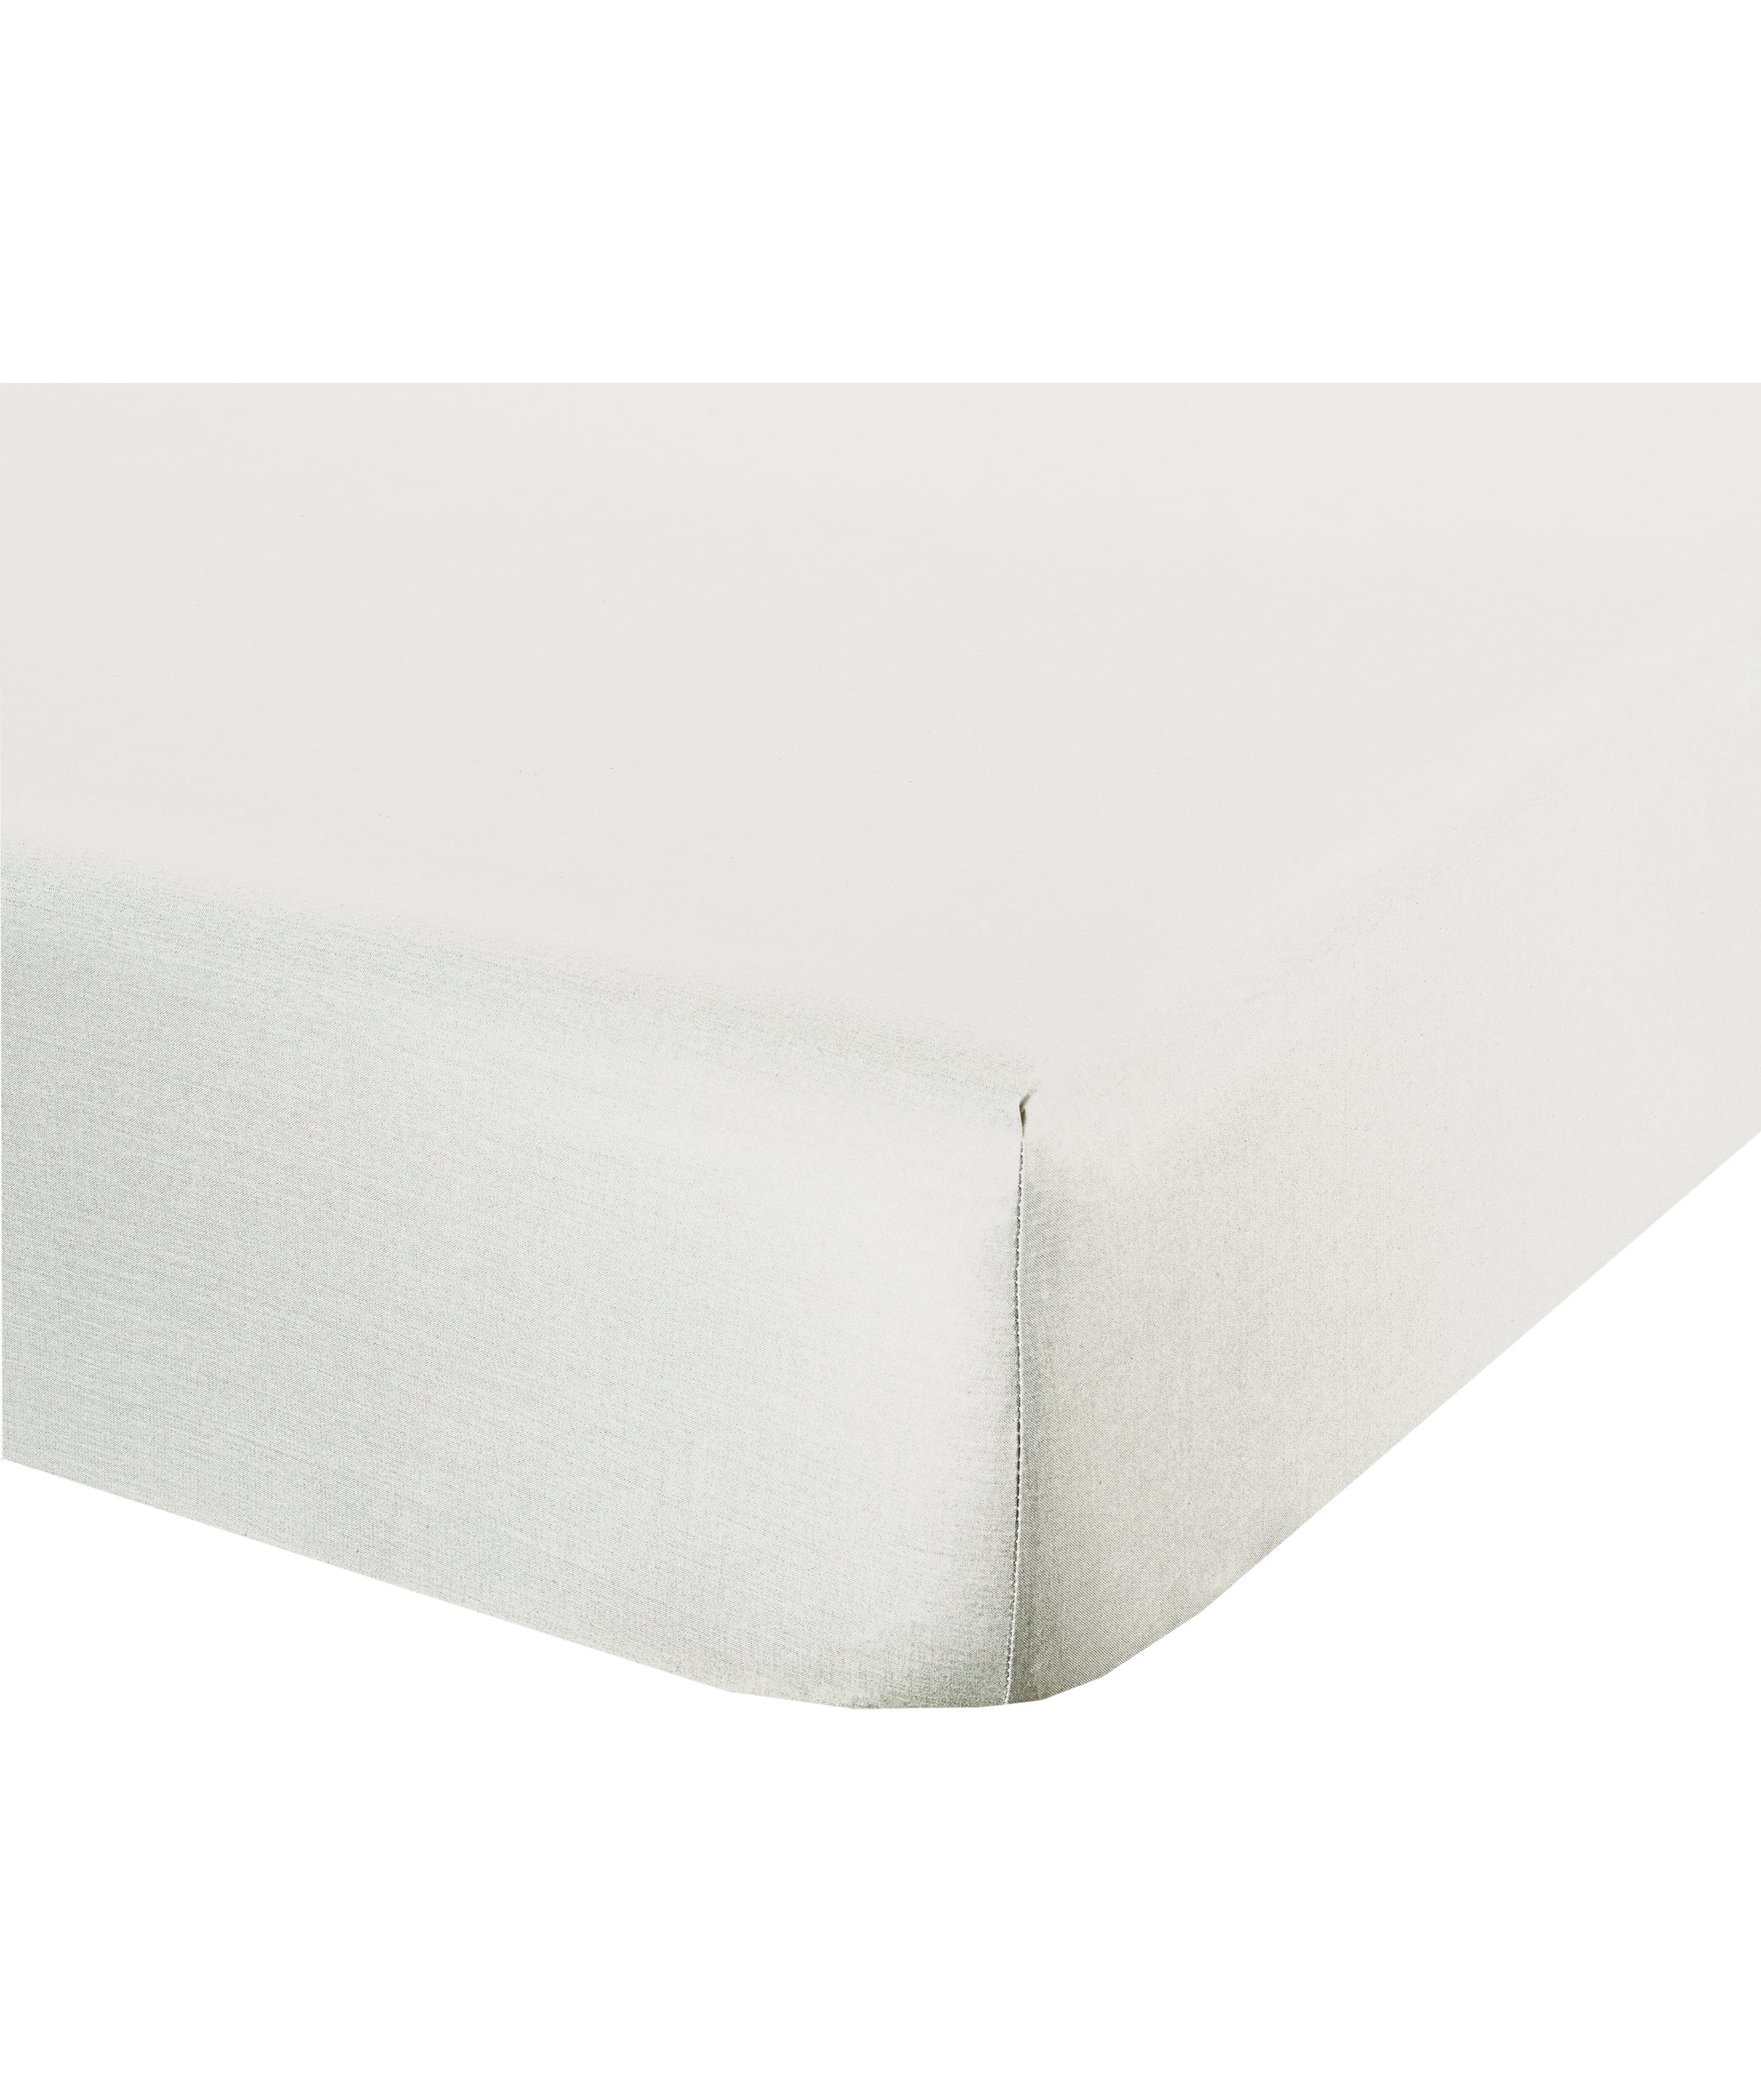 Completo letto lenzuola federe bifaccia double face stampa digitale in cotone made in italy MELANIA